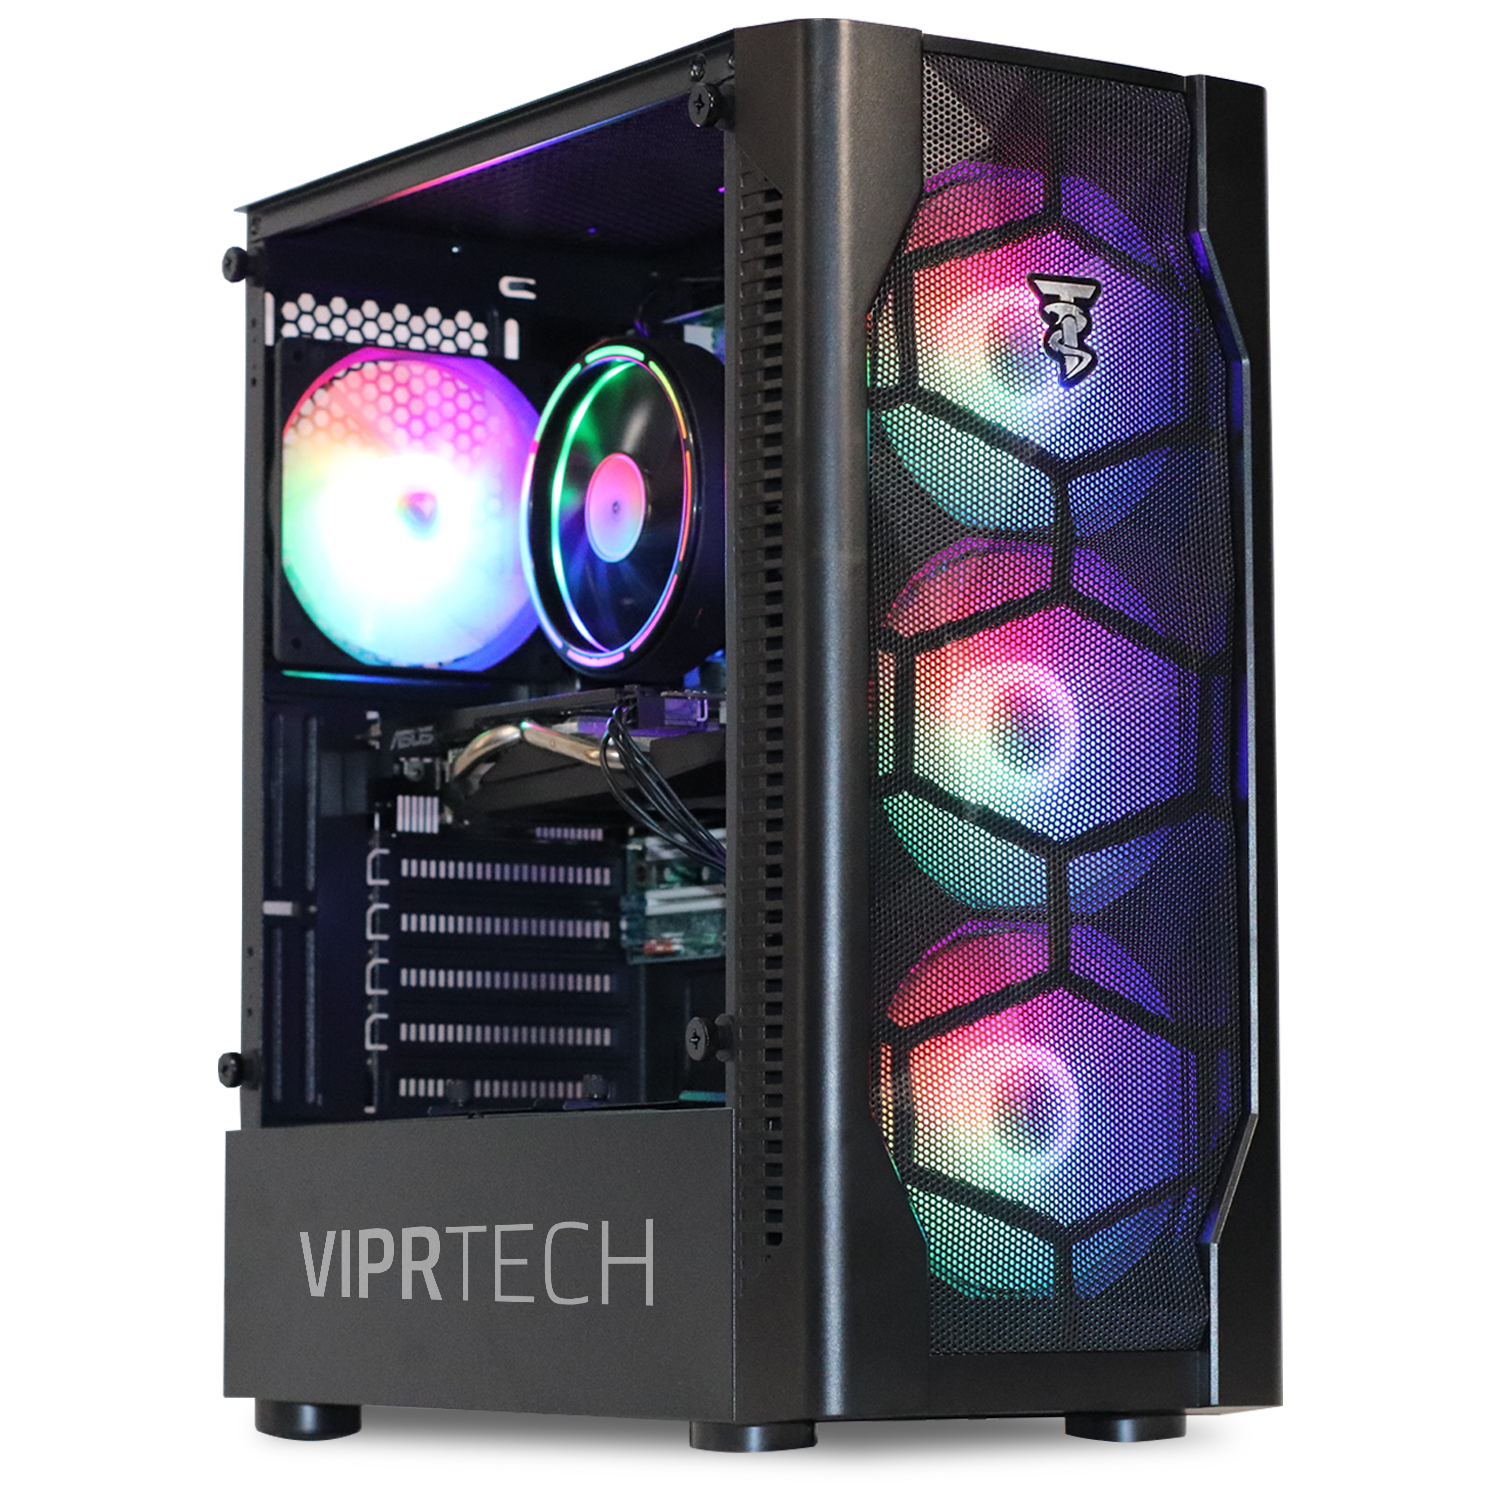 ViprTech Entry Level Gaming PC Desktop Computer - Intel Core i5 3.40GHz, GeForce GTX 650, 8GB RAM, 1TB HDD, WiFi, RGB Lighting, Windows 10 Pro, Warranty, Black